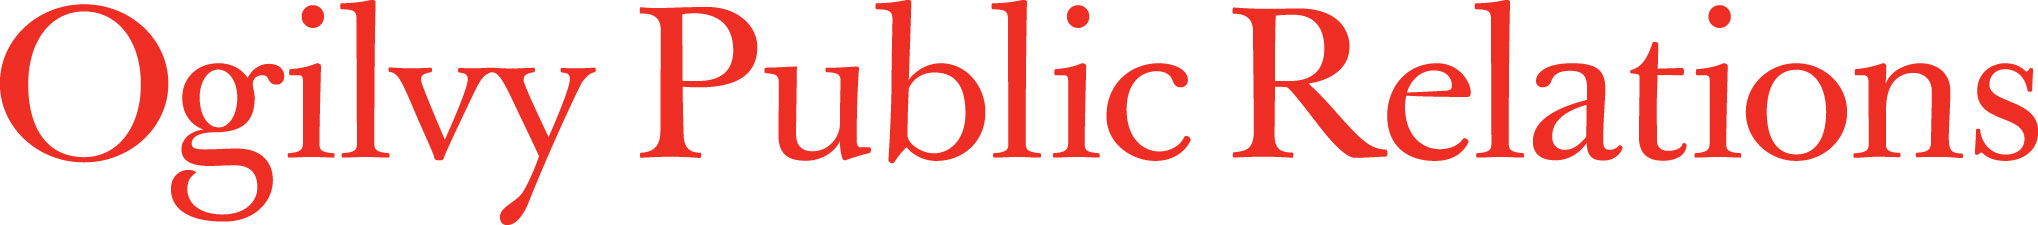  Best Digital Public Relations Company Logo: Ogilvy Public Relations